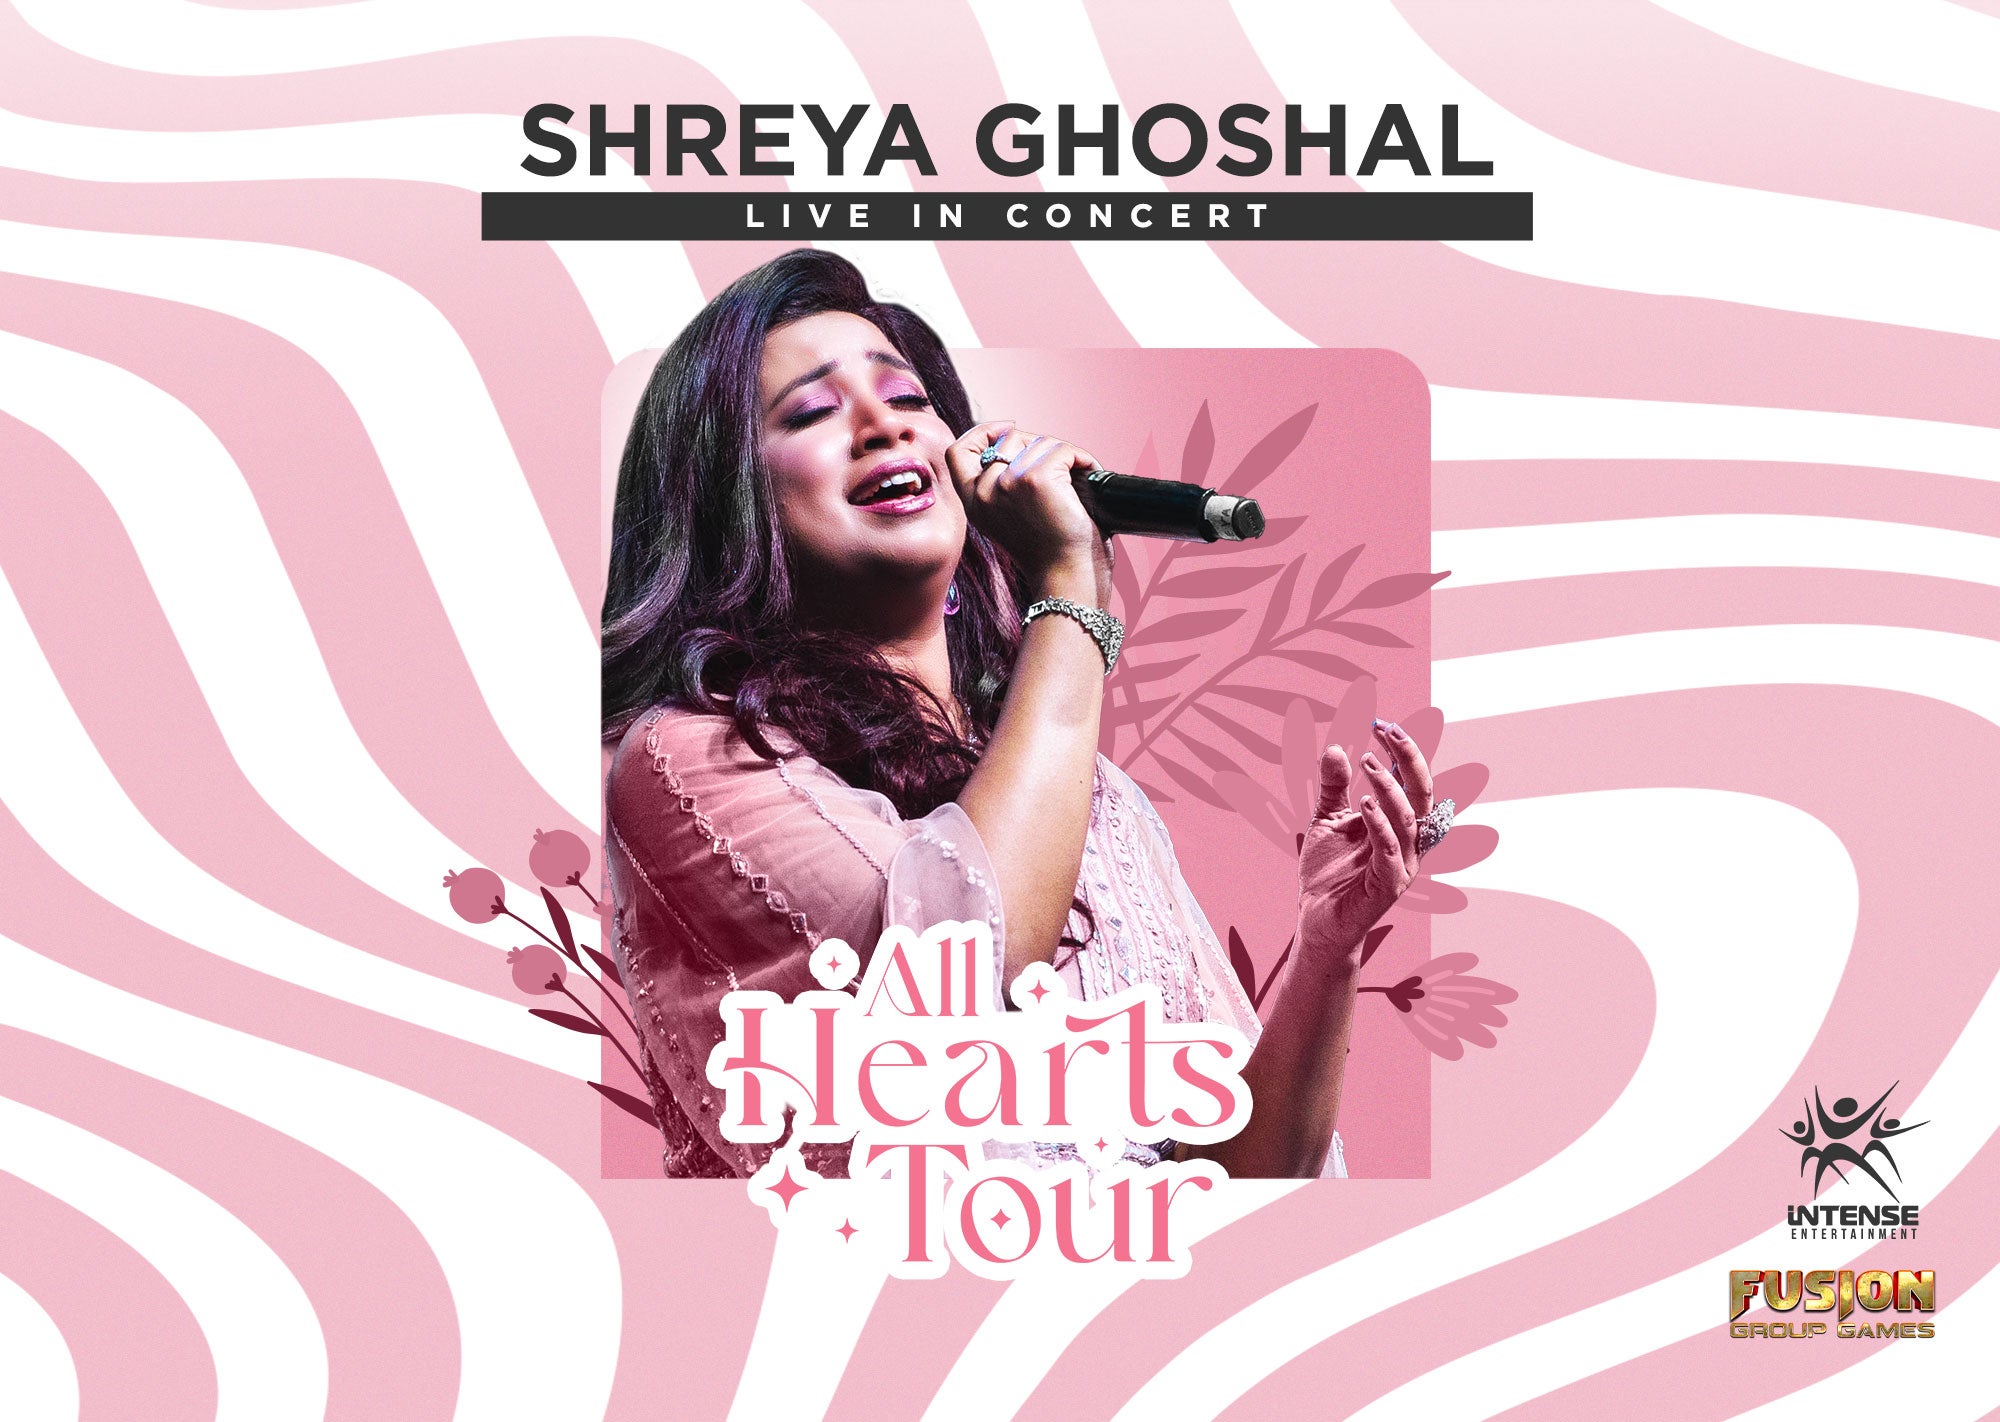 Shreya Ghoshal returns to Austin Area June 15th